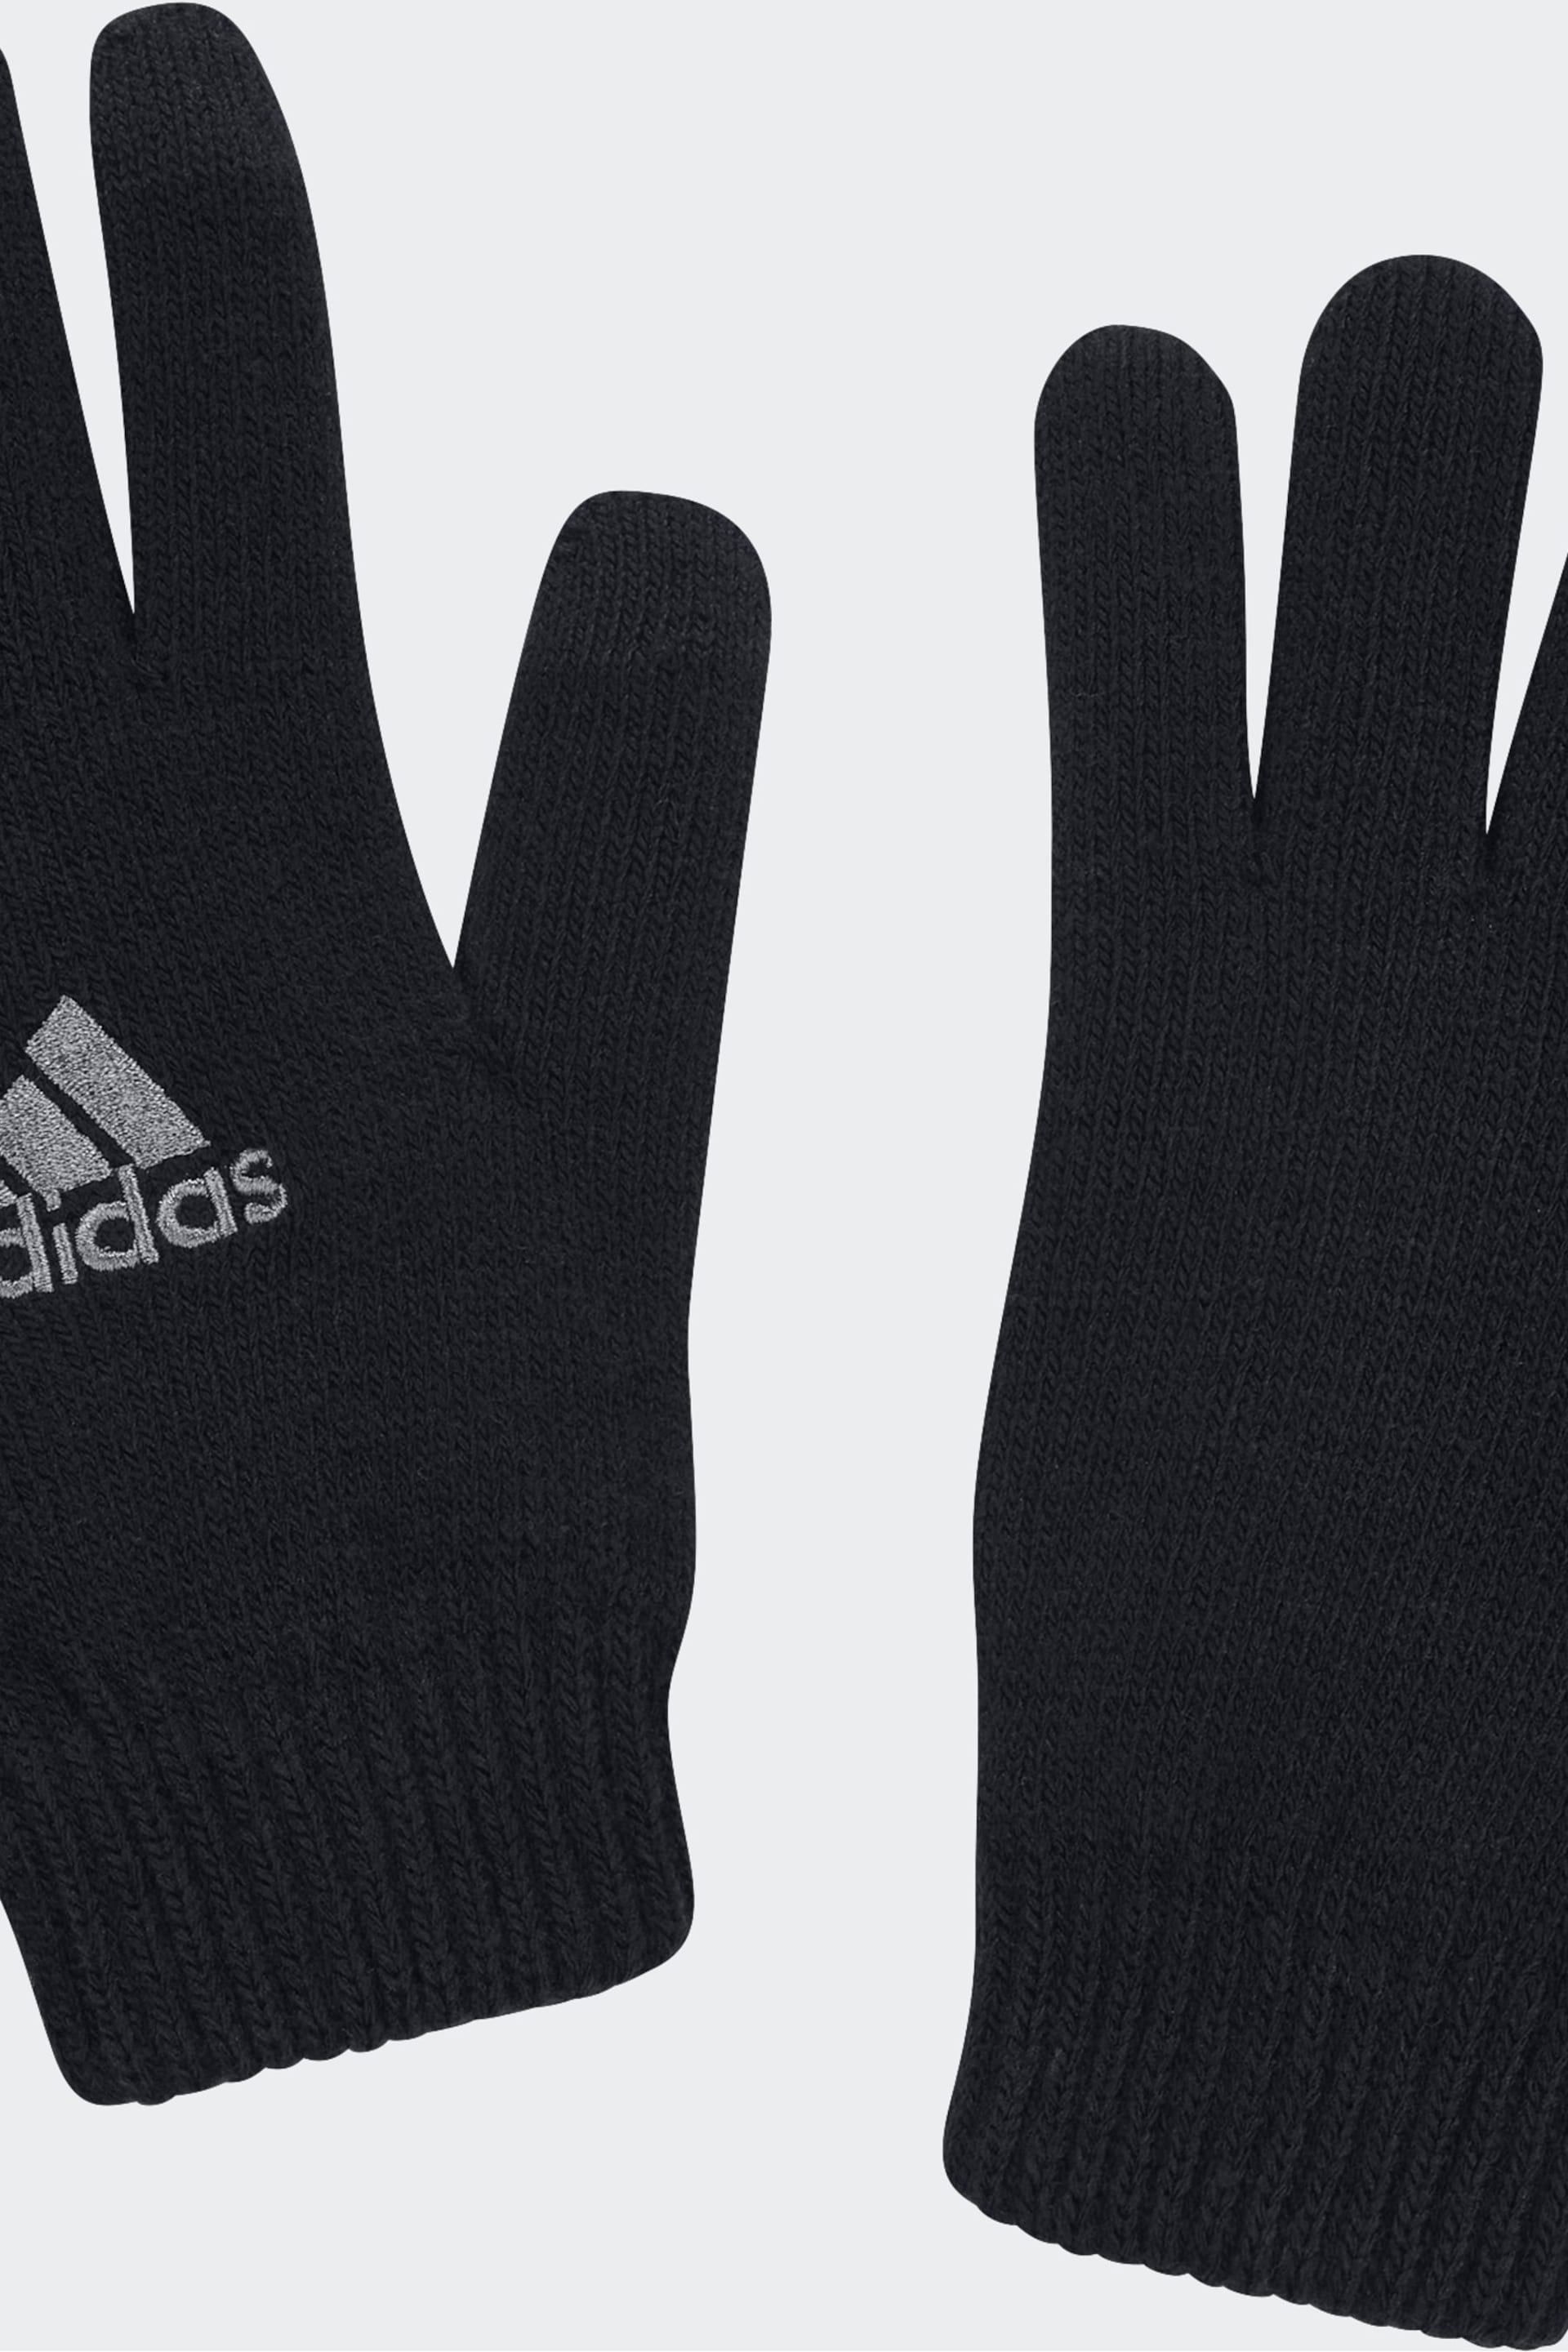 adidas Black Essentials Gloves - Image 2 of 4